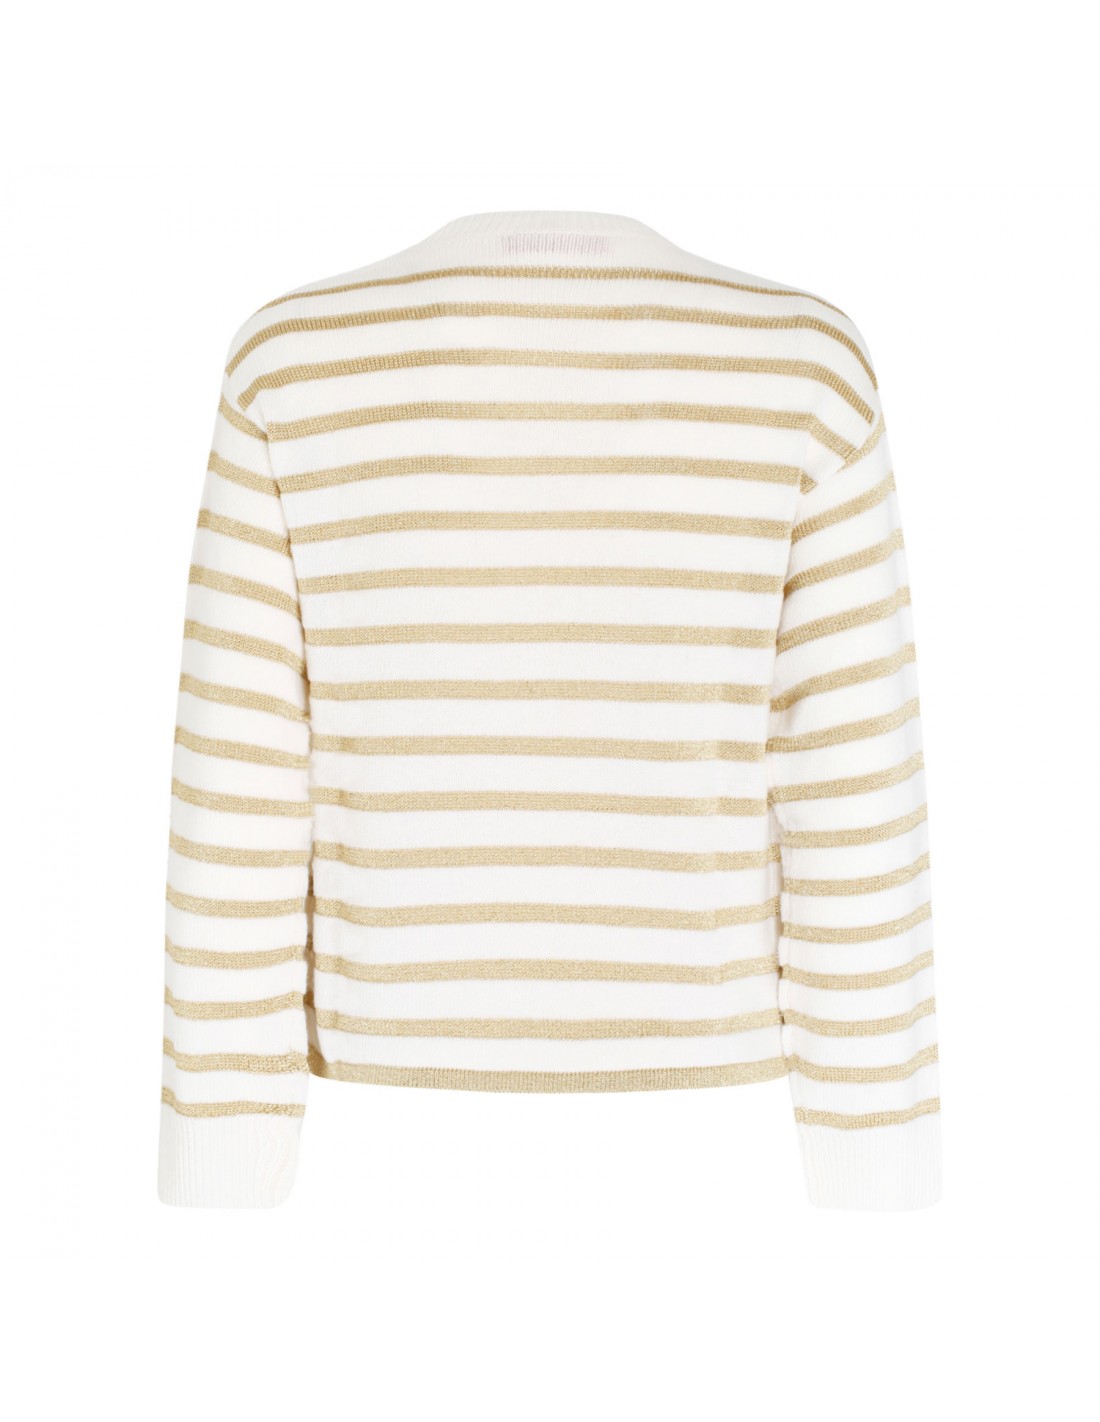 VLogo striped sweater